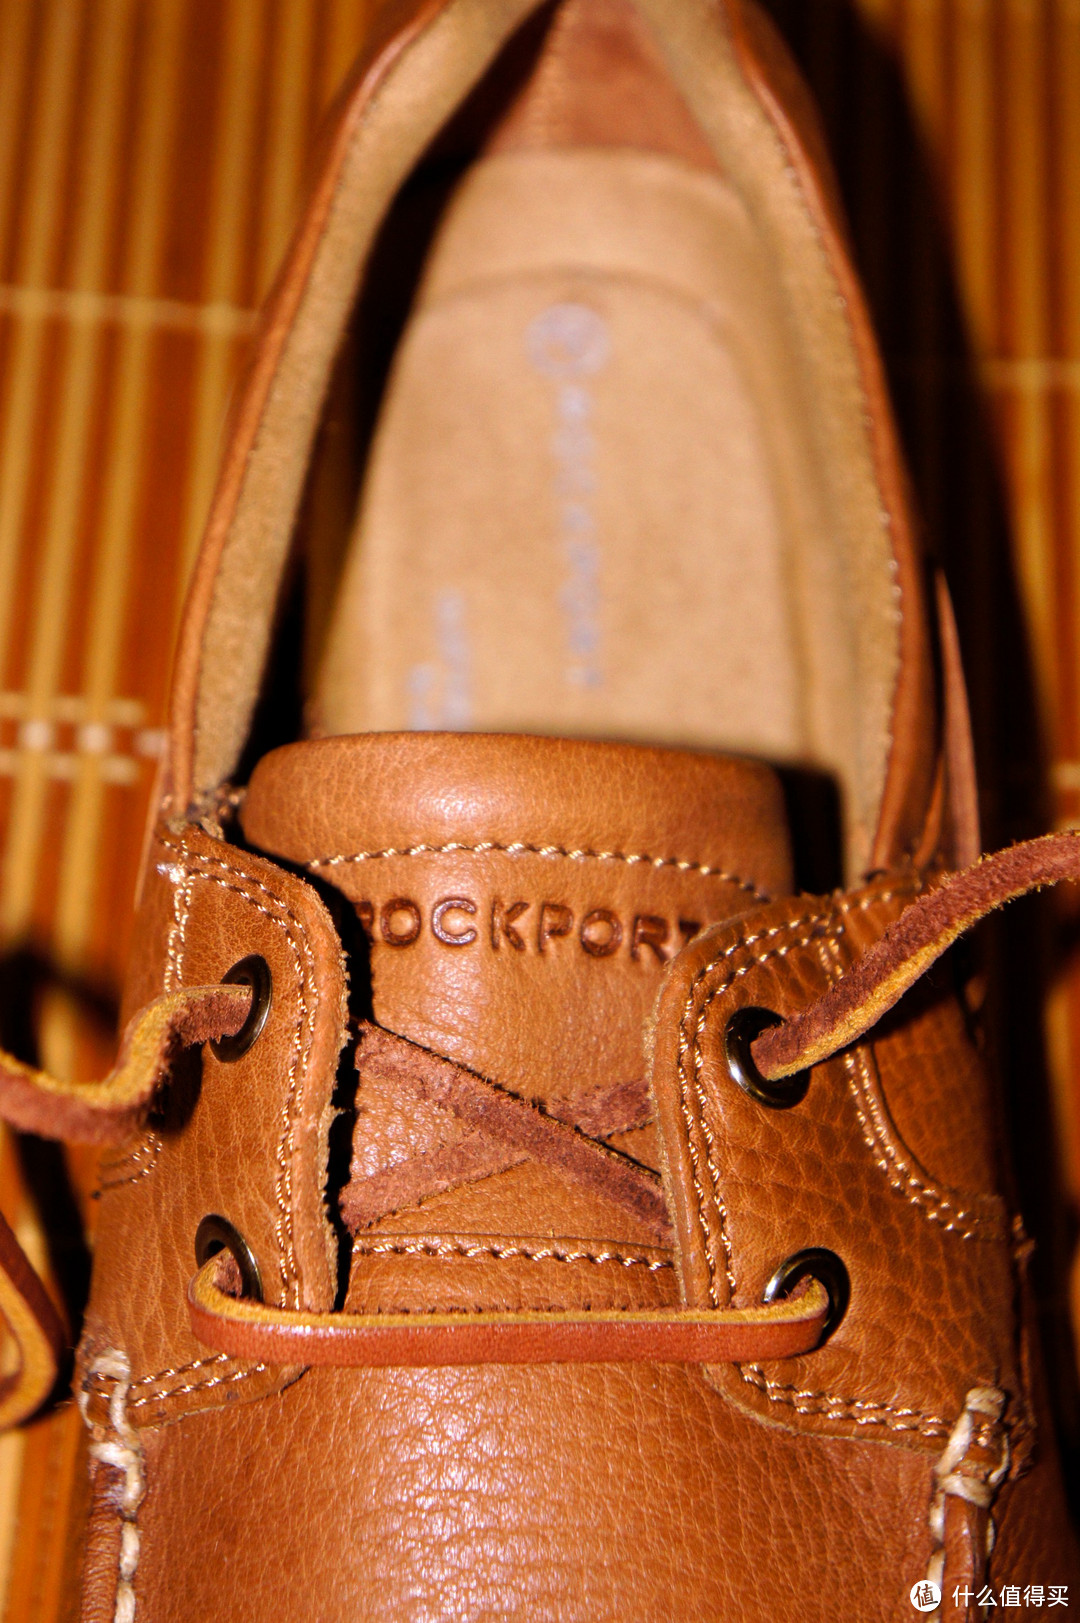 鞋舌上也有Rockport Logo，鞋垫上有adiPRENE® by adidas logo